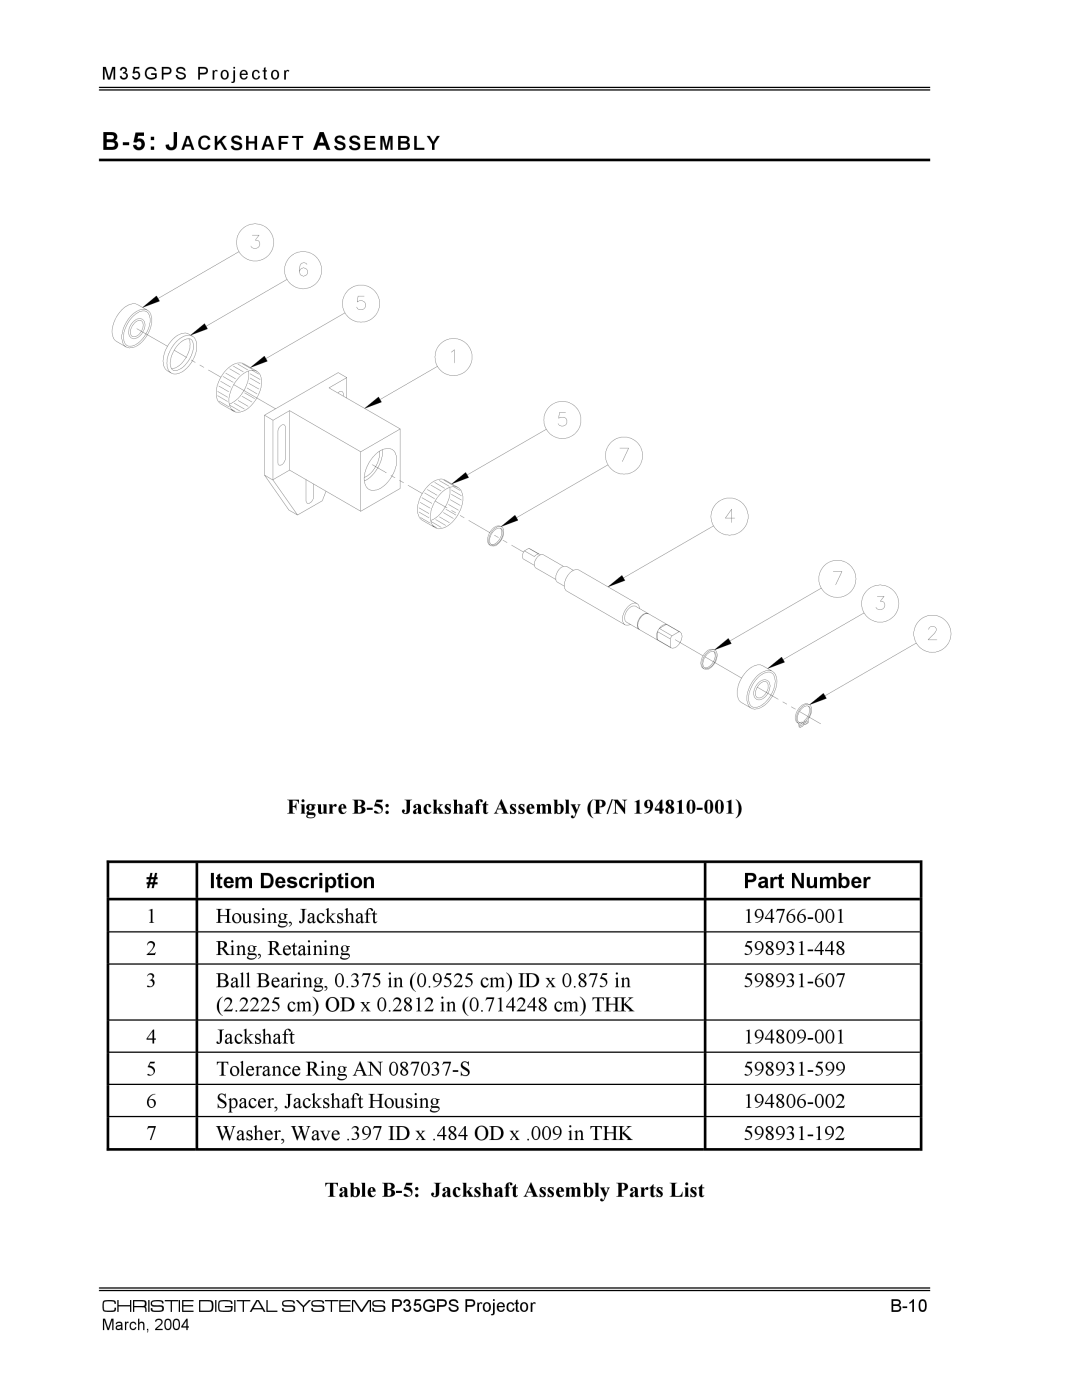 Christie Digital Systems P35GPS-AT, P35GPS-MT Figure B-5 Jackshaft Assembly P/N, Table B-5 Jackshaft Assembly Parts List 